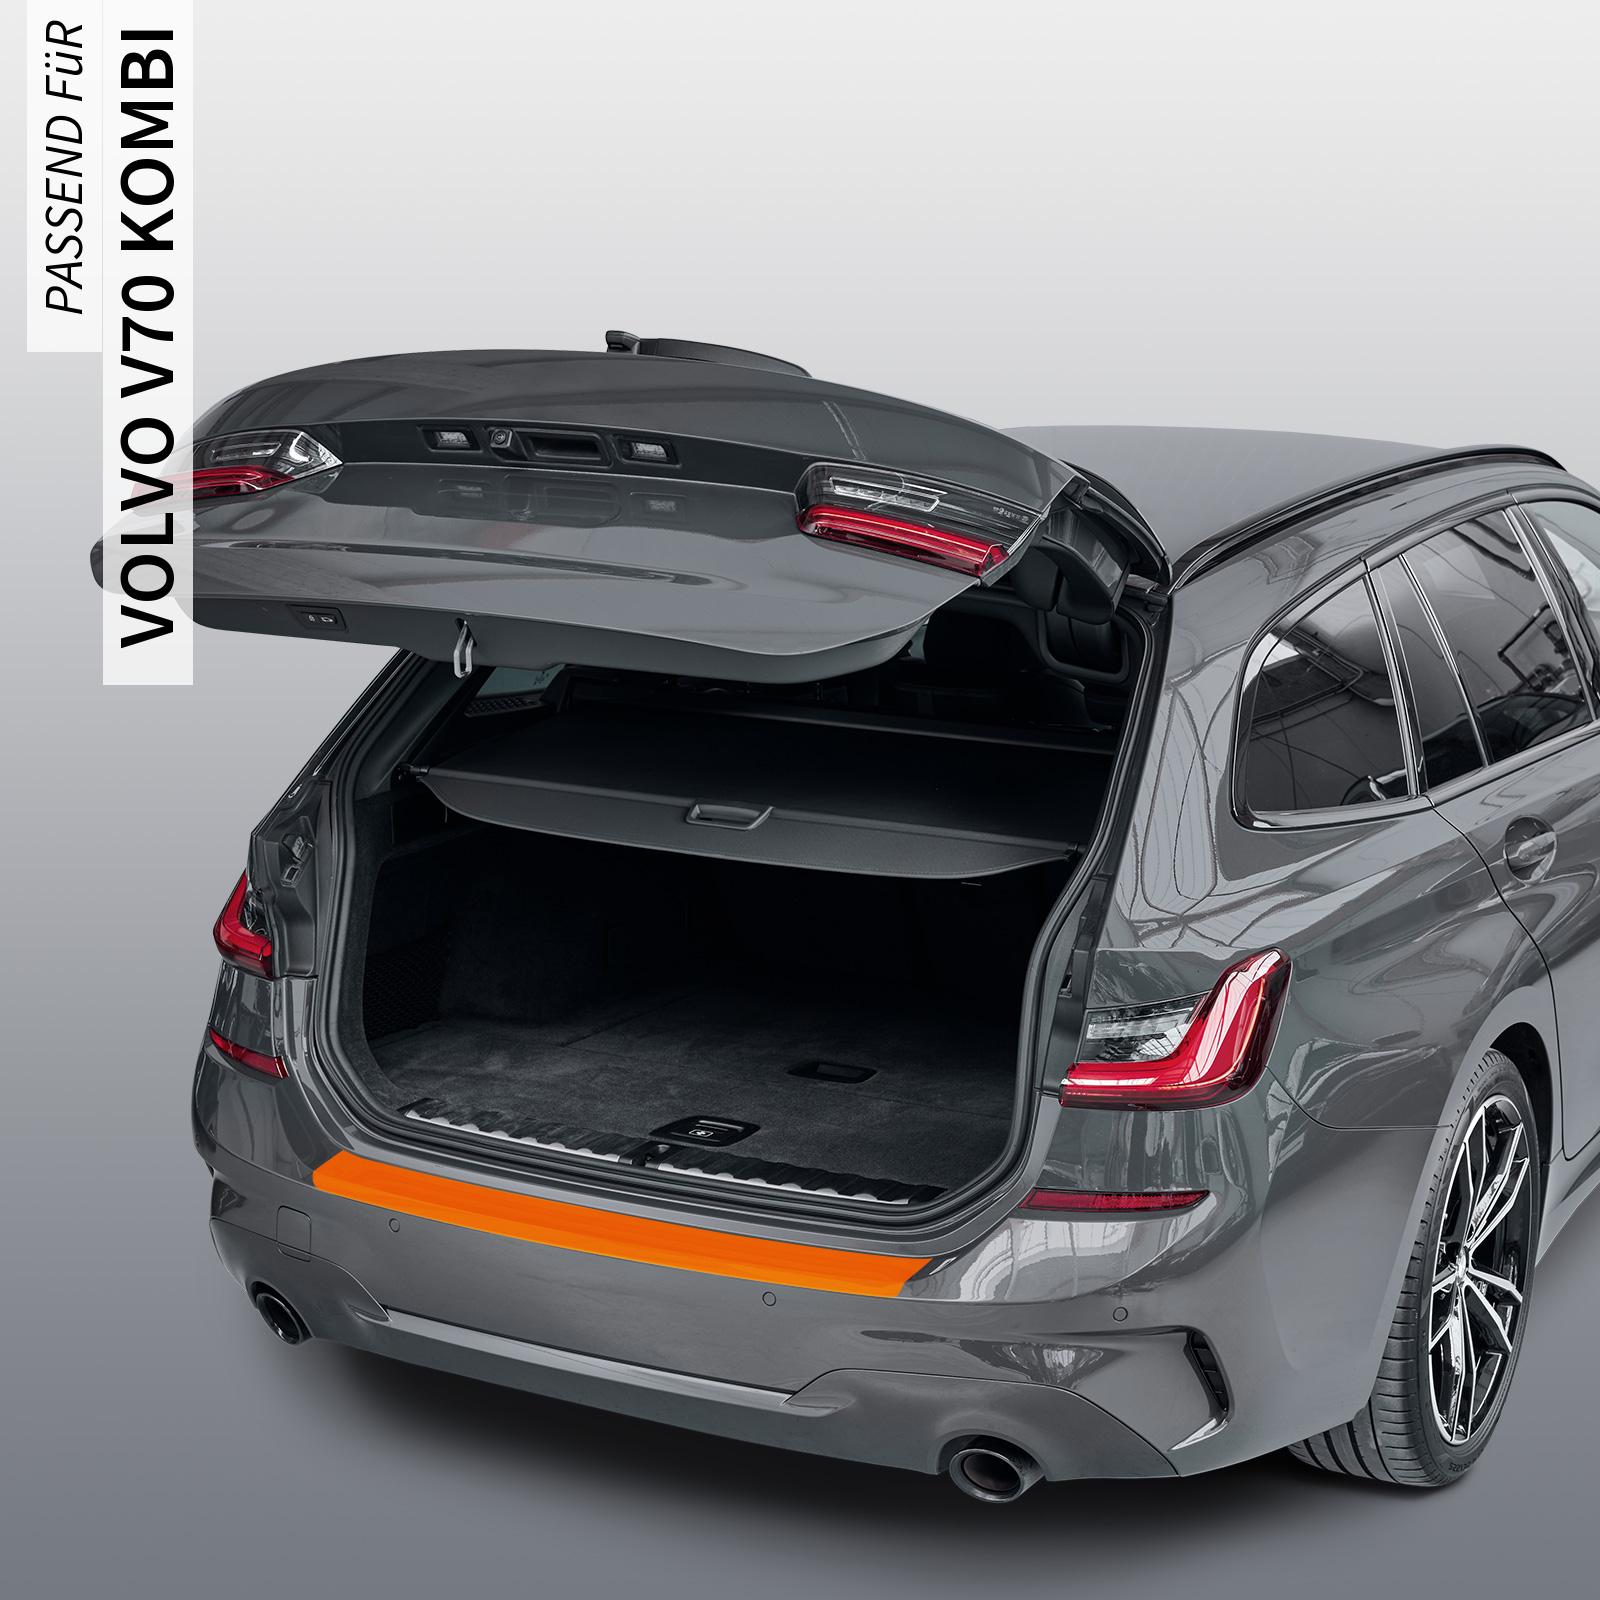 Ladekantenschutzfolie - Transparent Glatt MATT 110 µm stark  für Volvo V70 Kombi Typ B, Facelift BJ 2013-2016